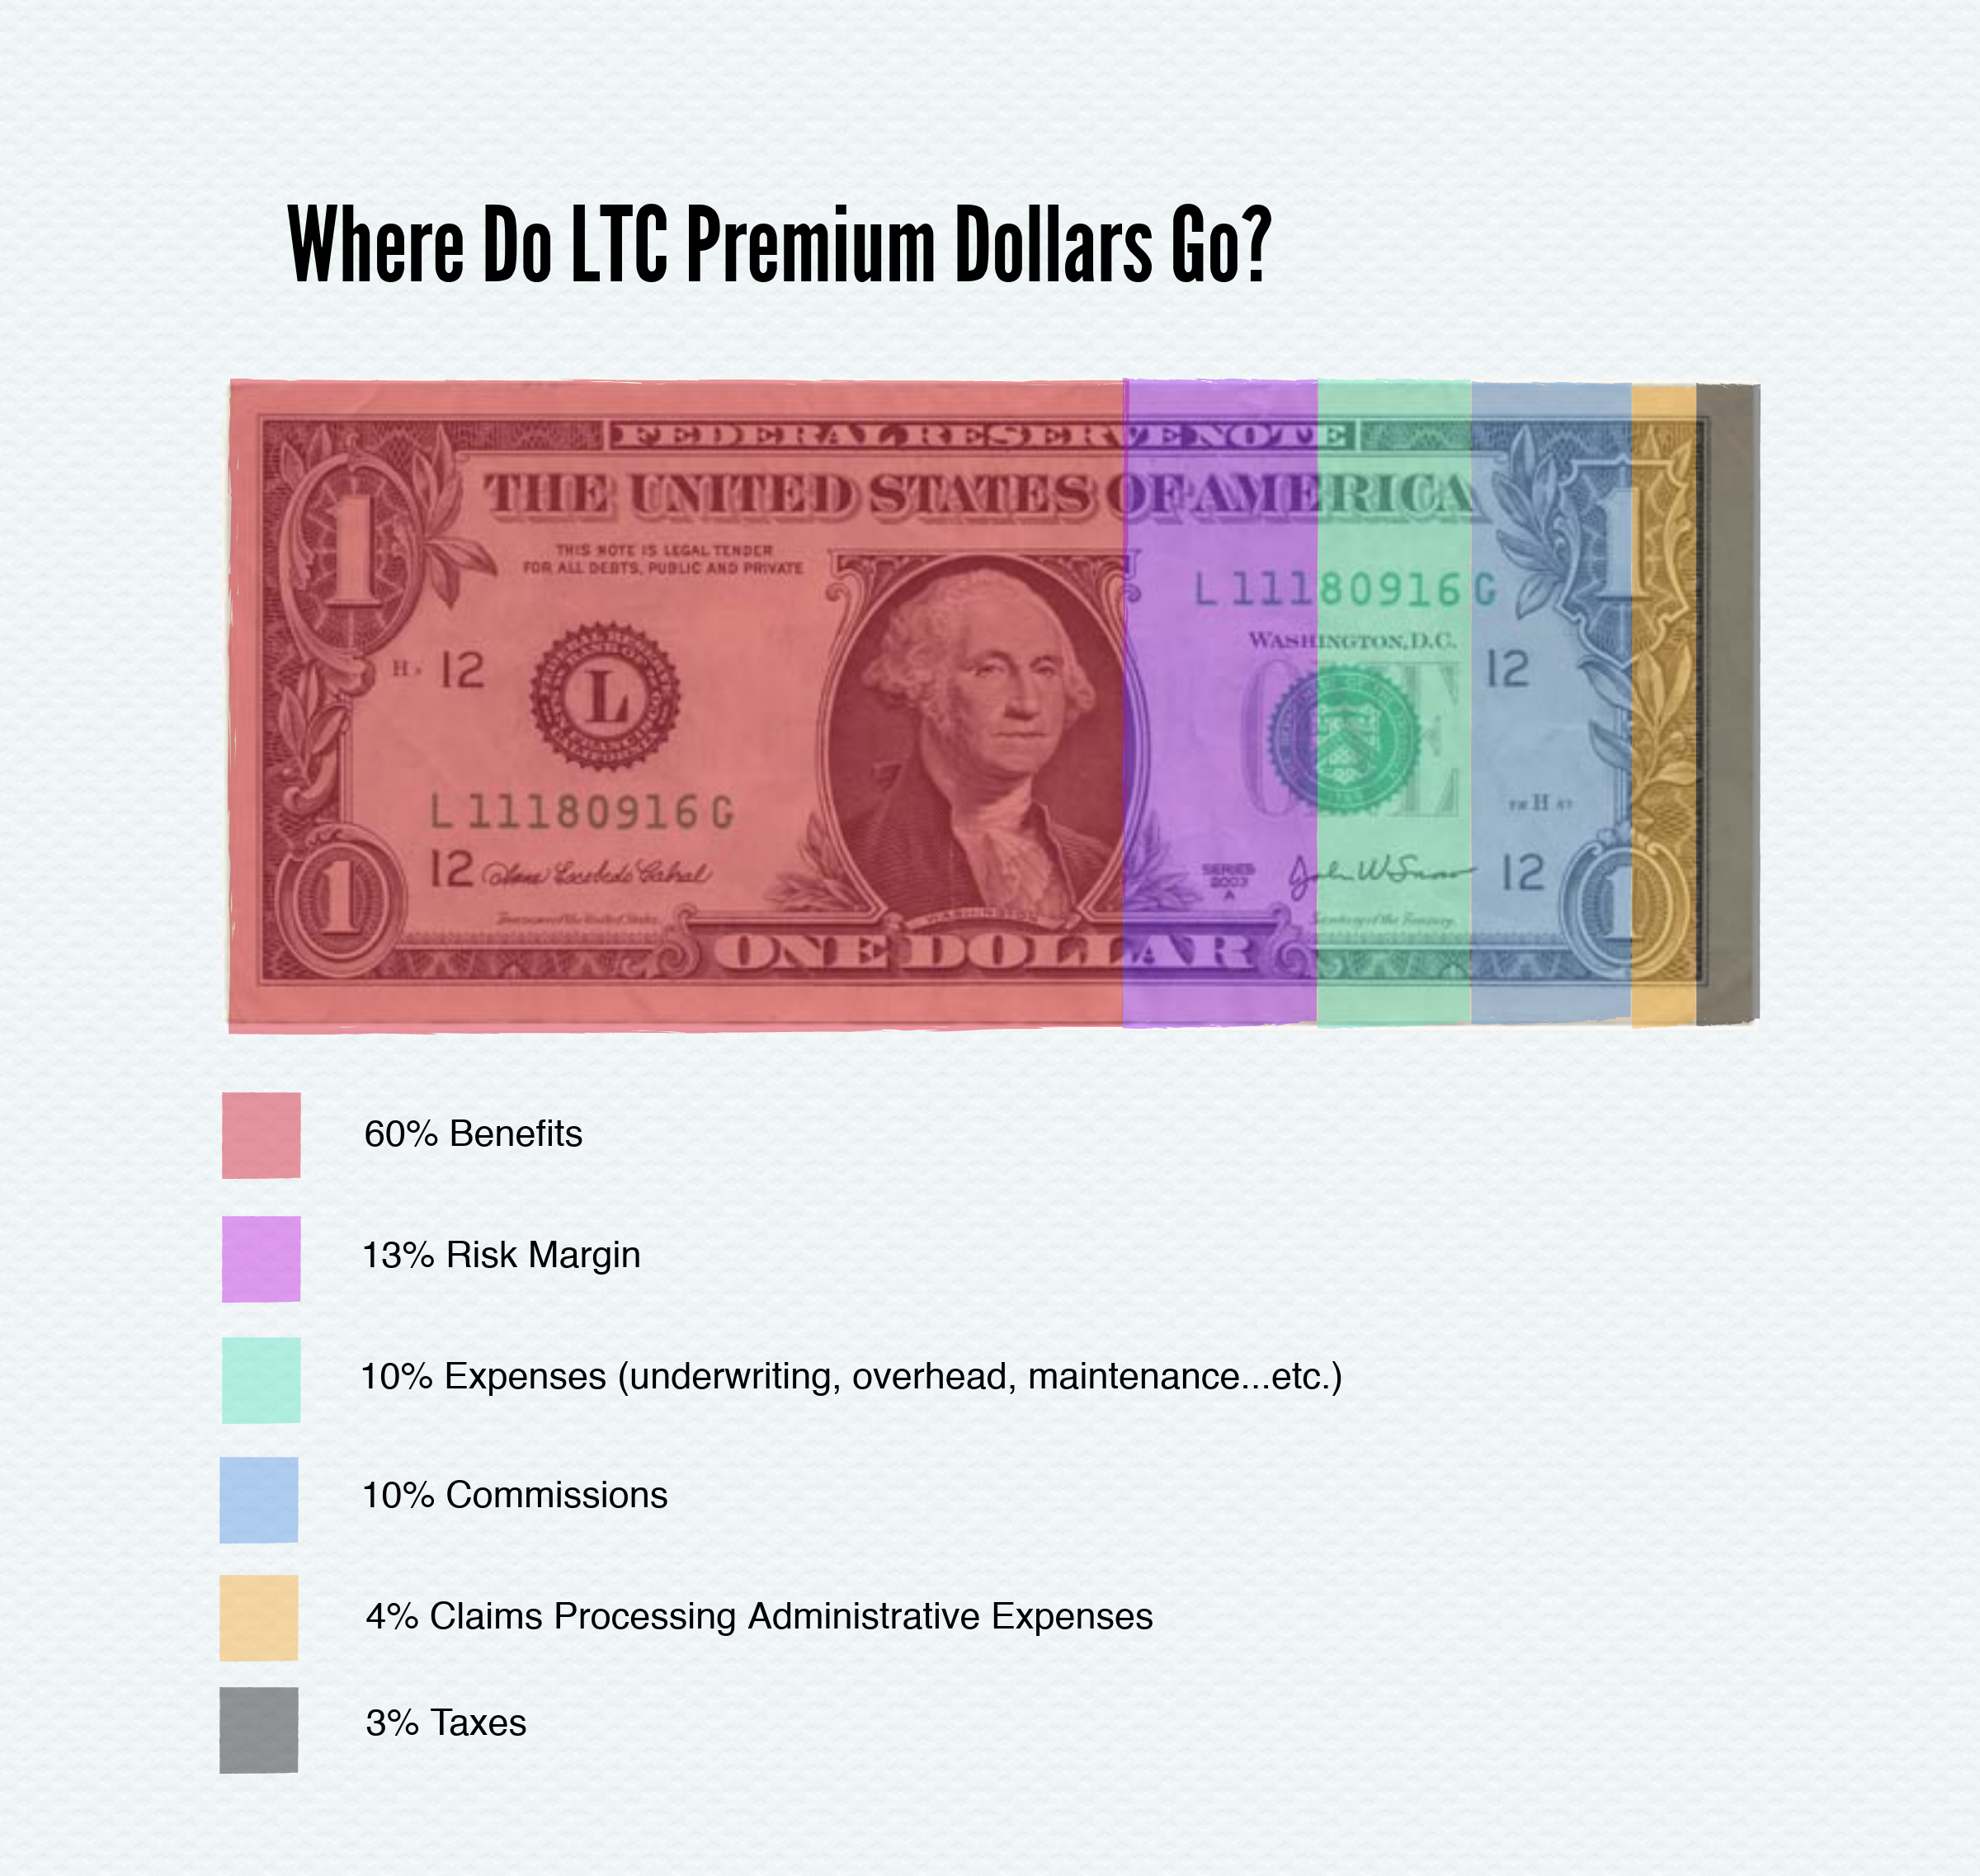 Where Do LTC Premium Dollars Go?